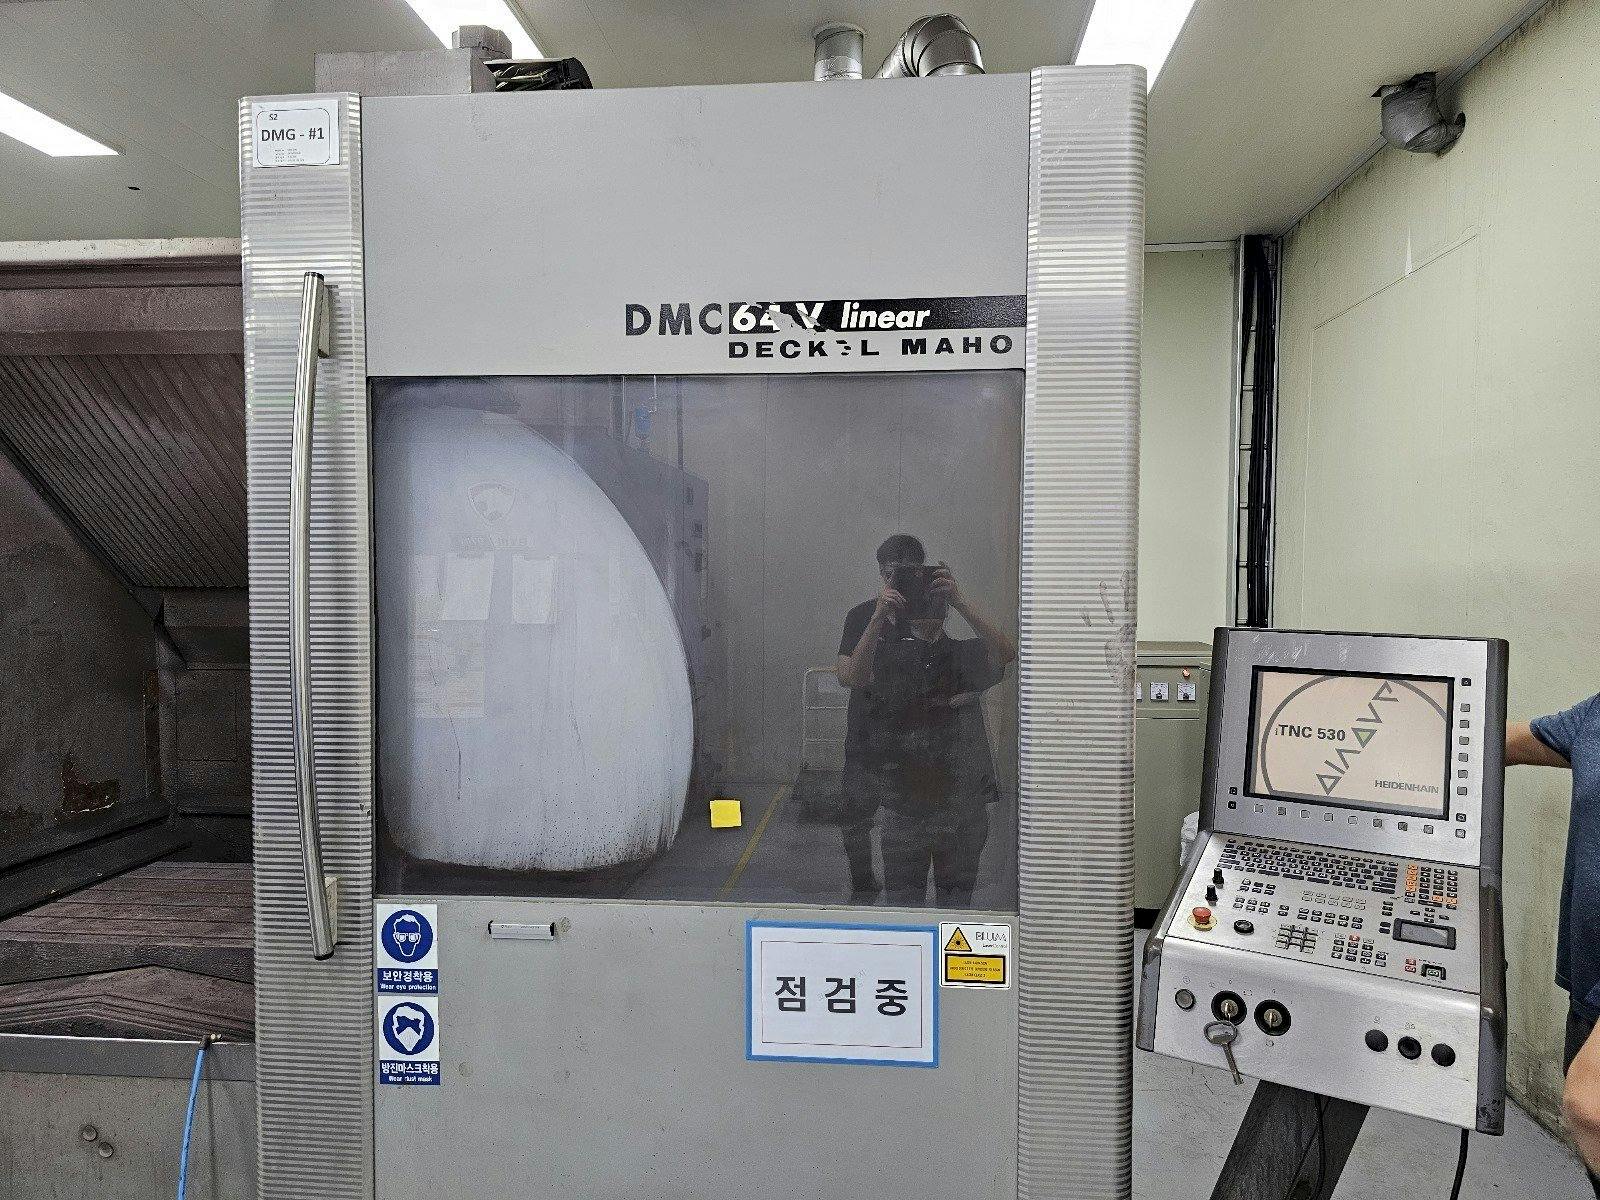 A DECKEL MAHO DMC 64V linear  gép elölnézete